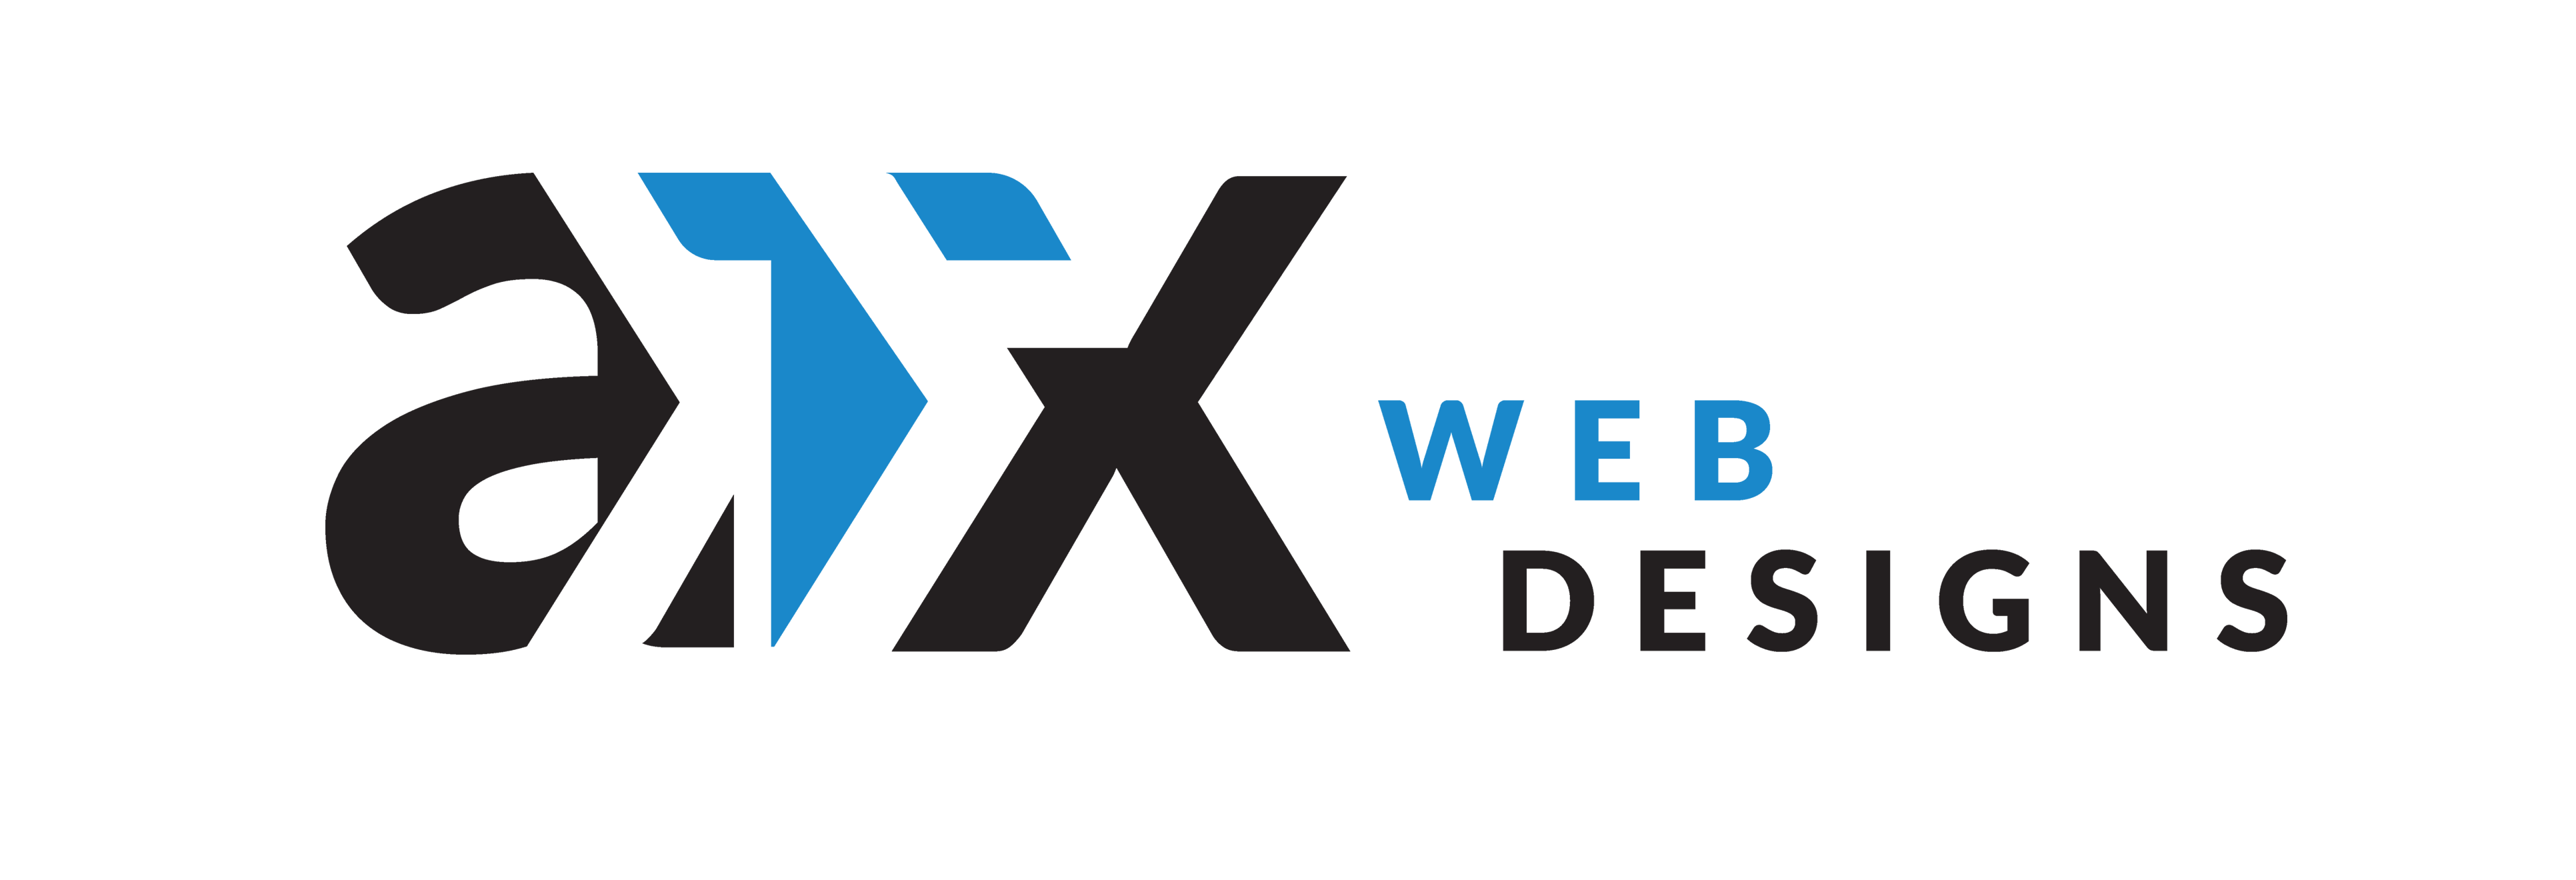 Best Web Design Agency Logo: ATX Web Designs